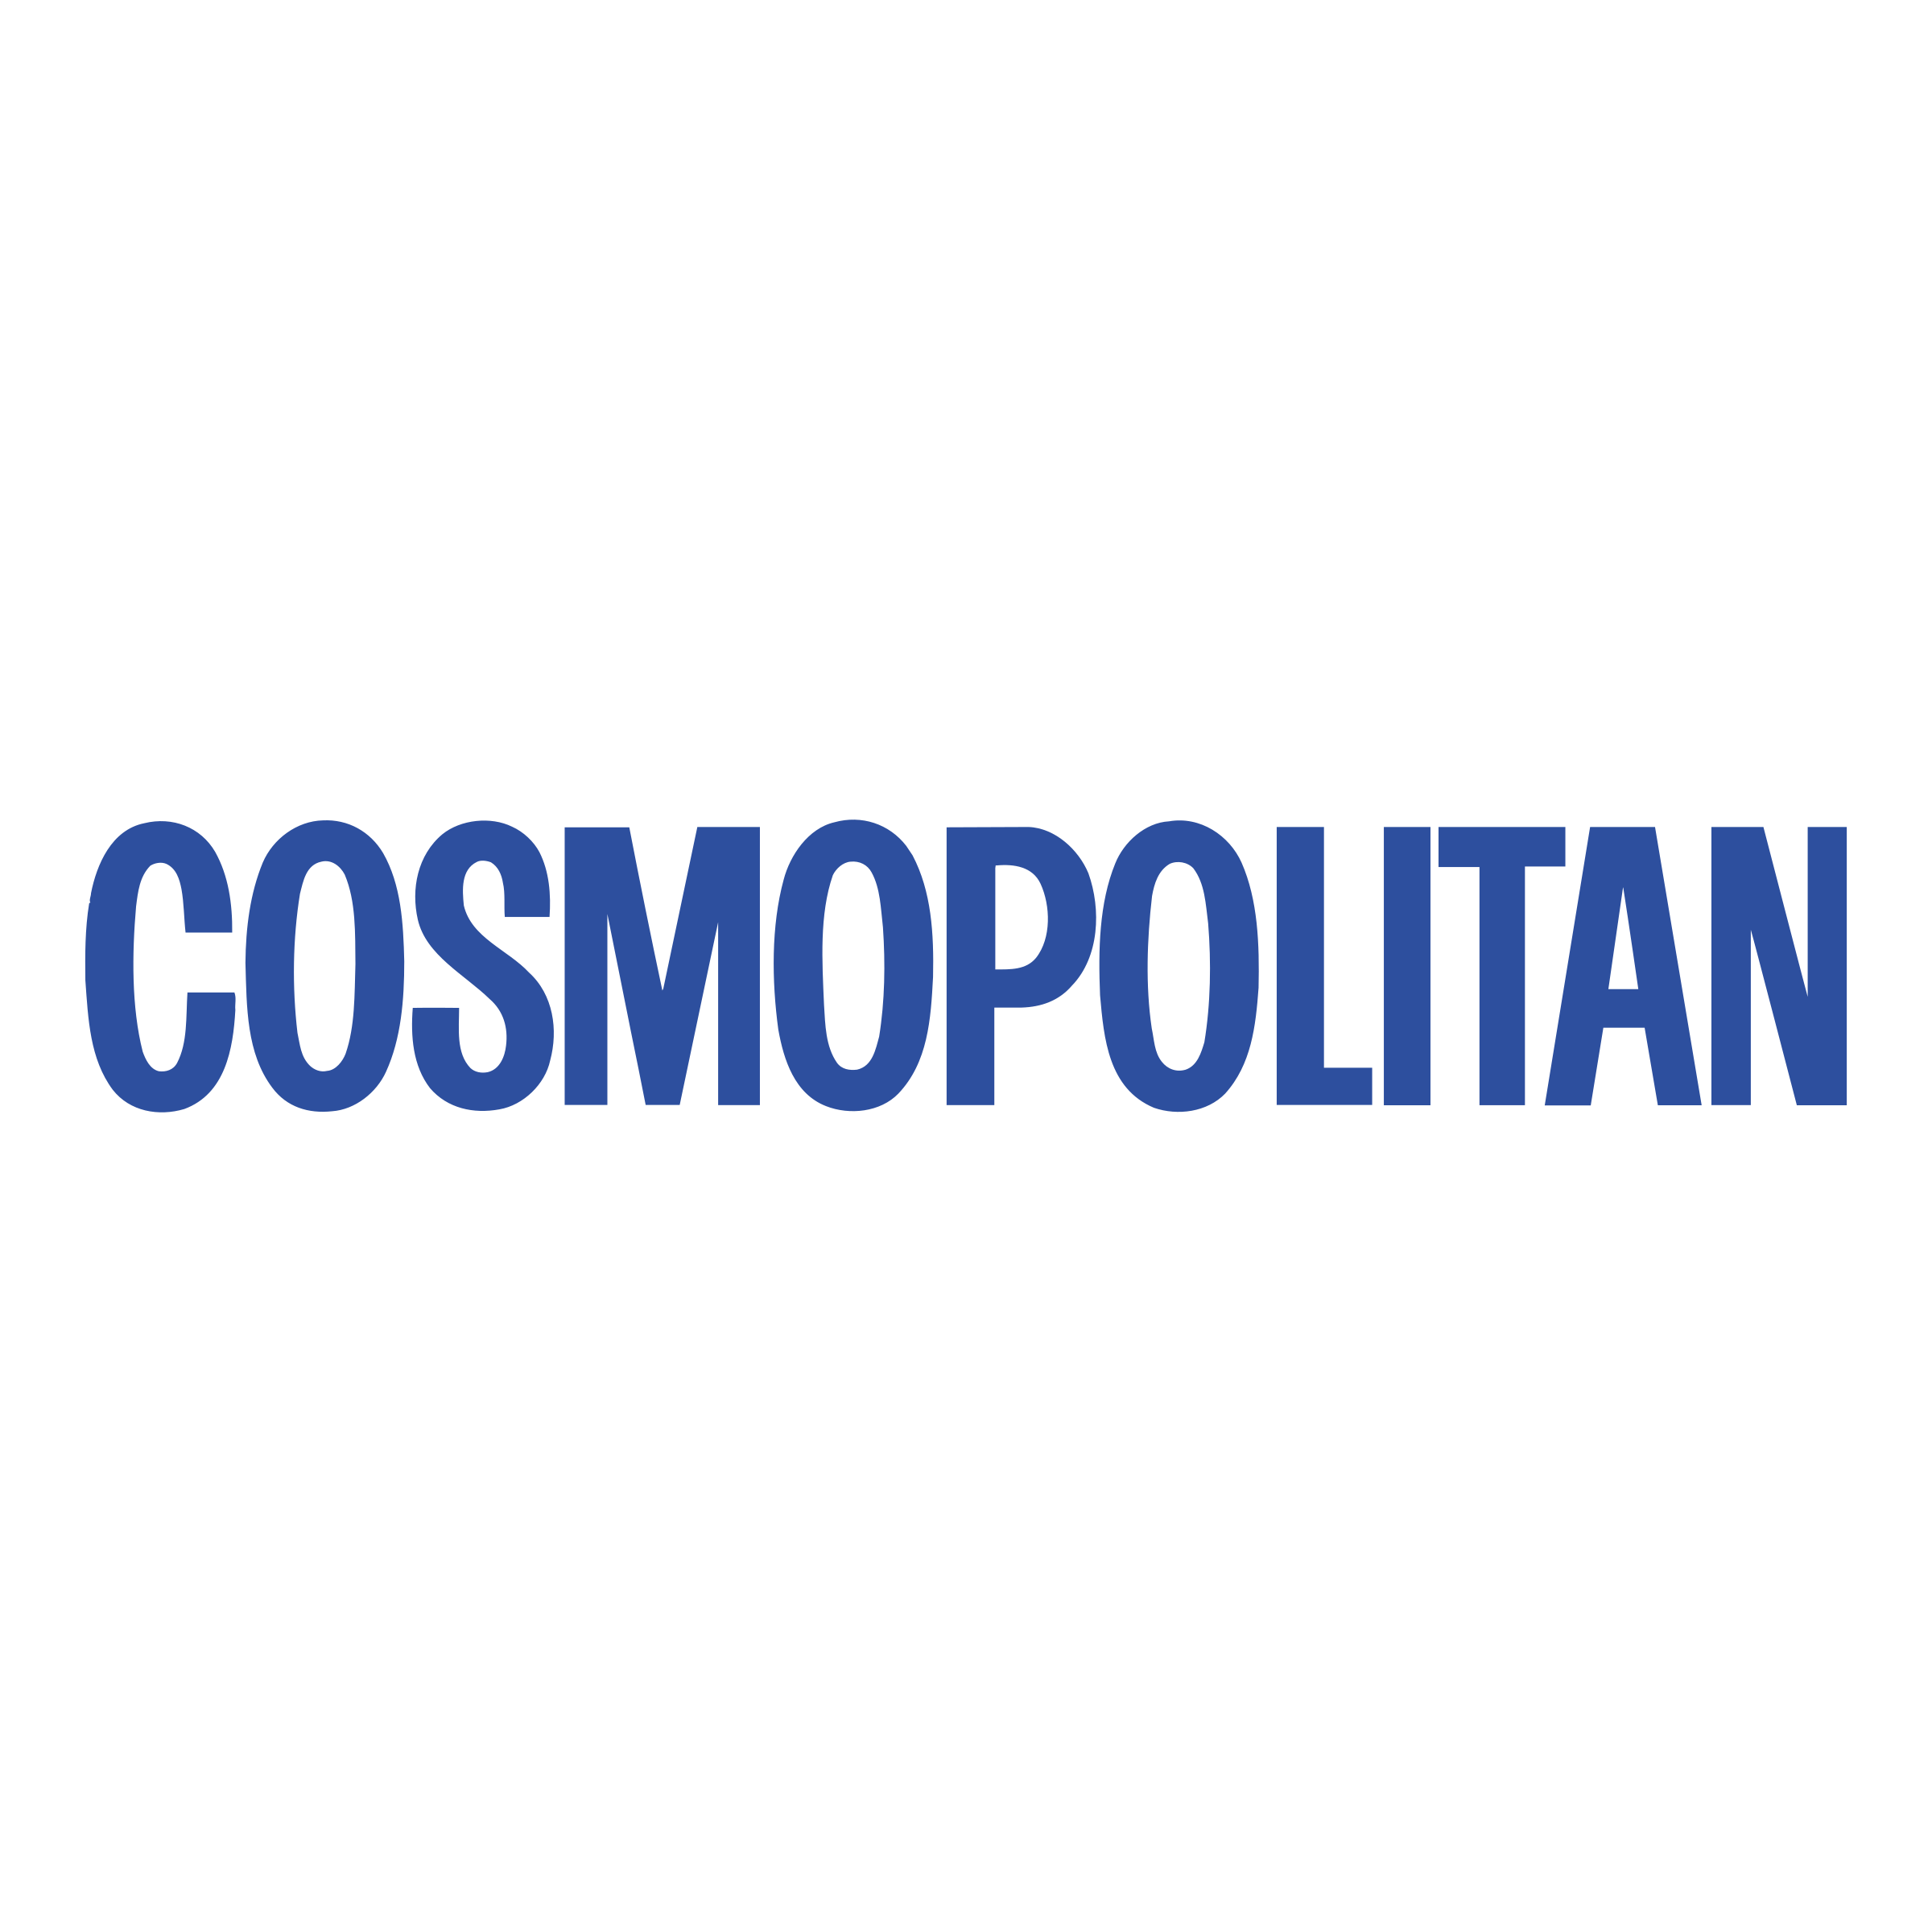 Cosmopolitan Logo - Cosmopolitan Logo PNG Transparent & SVG Vector - Freebie Supply